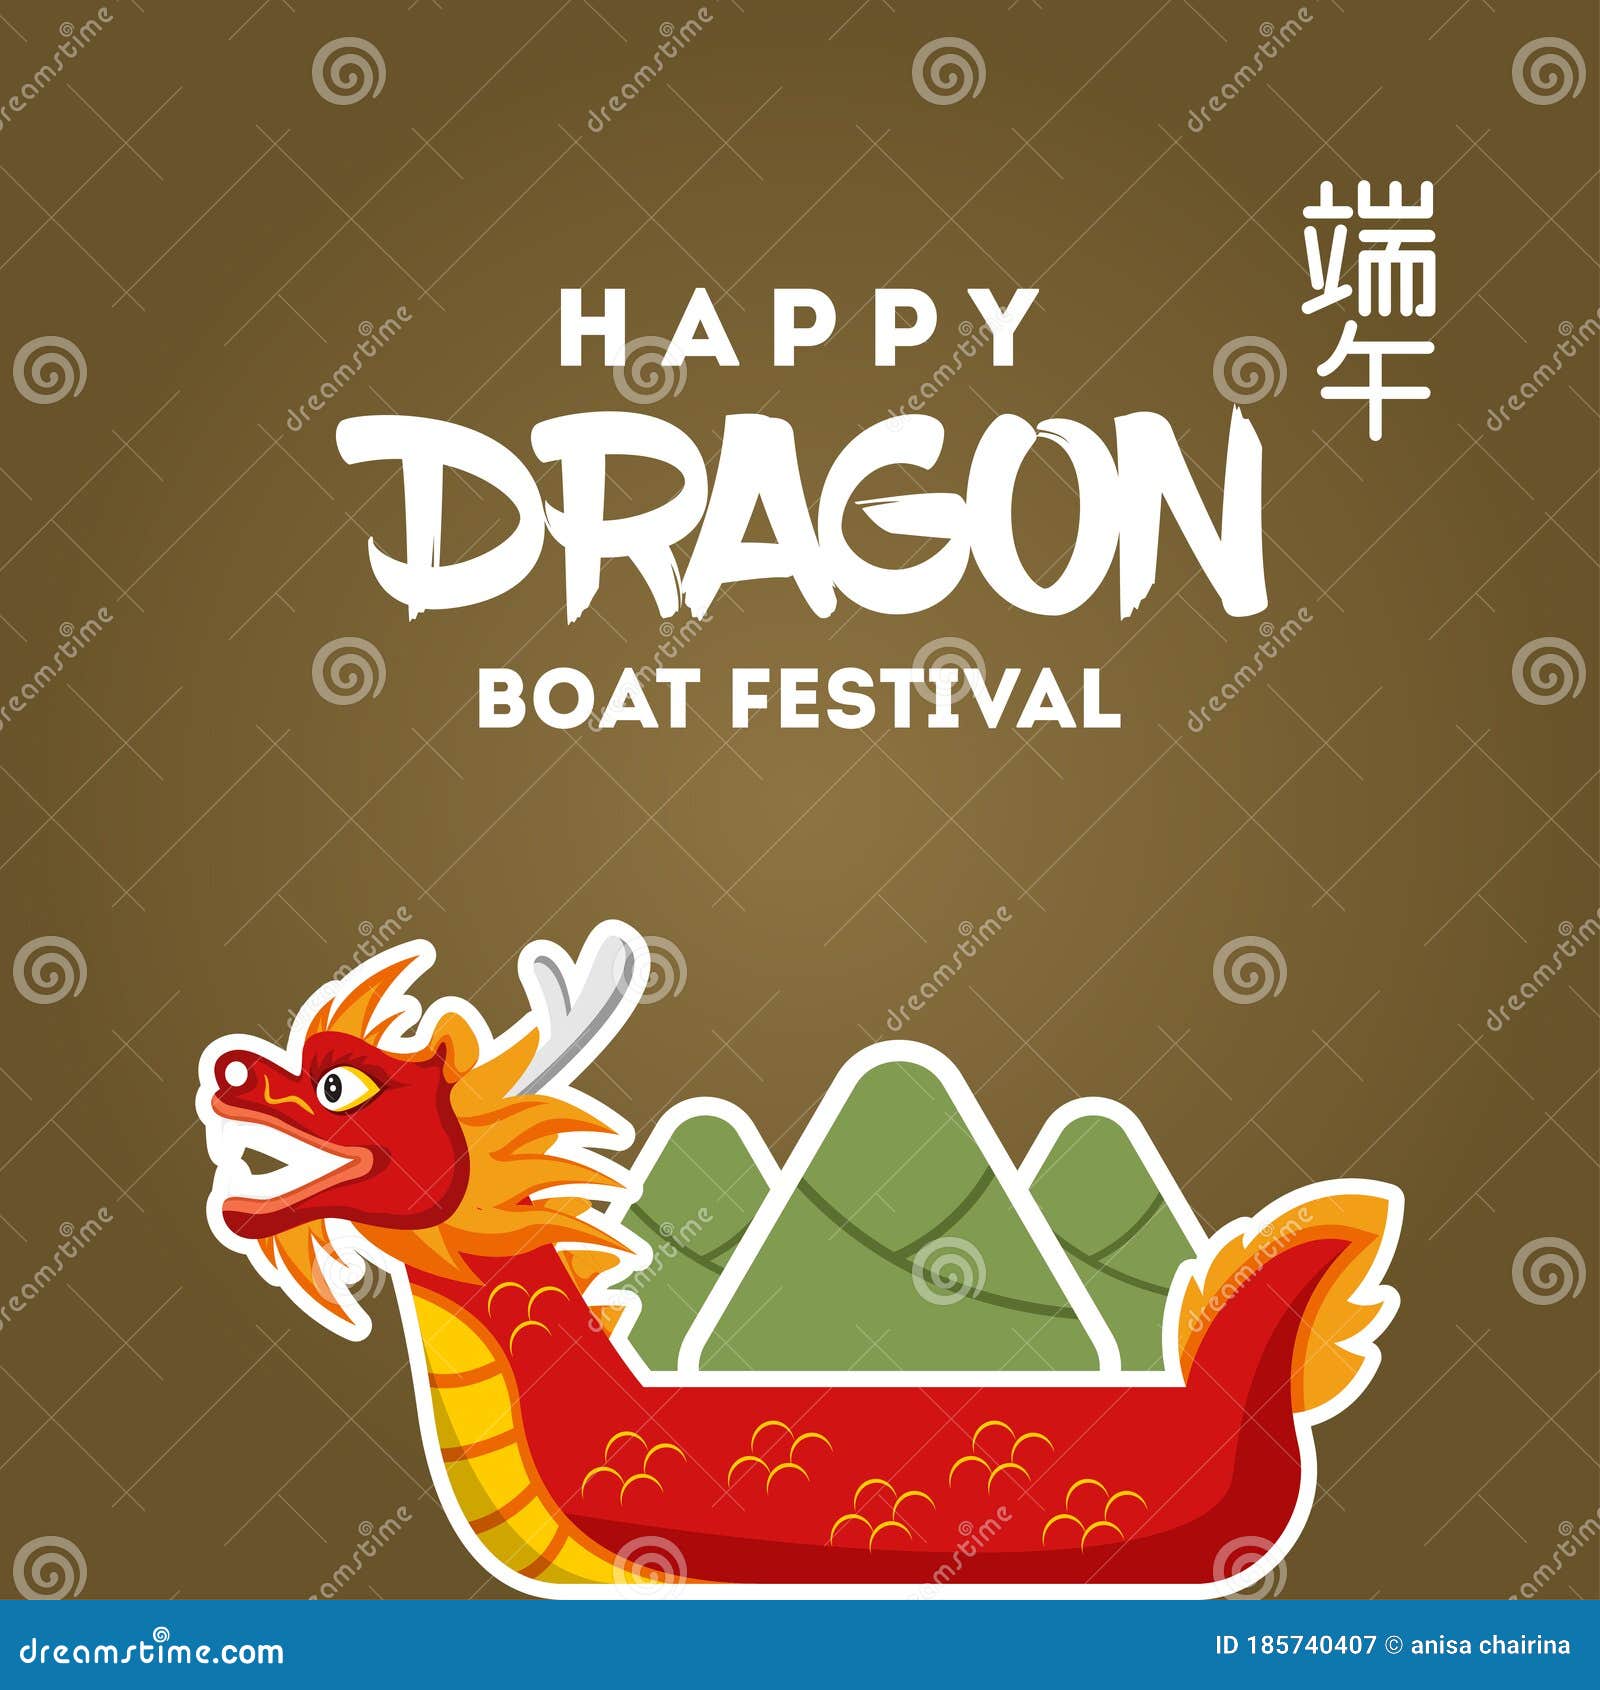 Happy Dragon Boat Festival Vector Design Illustration for Celebrate